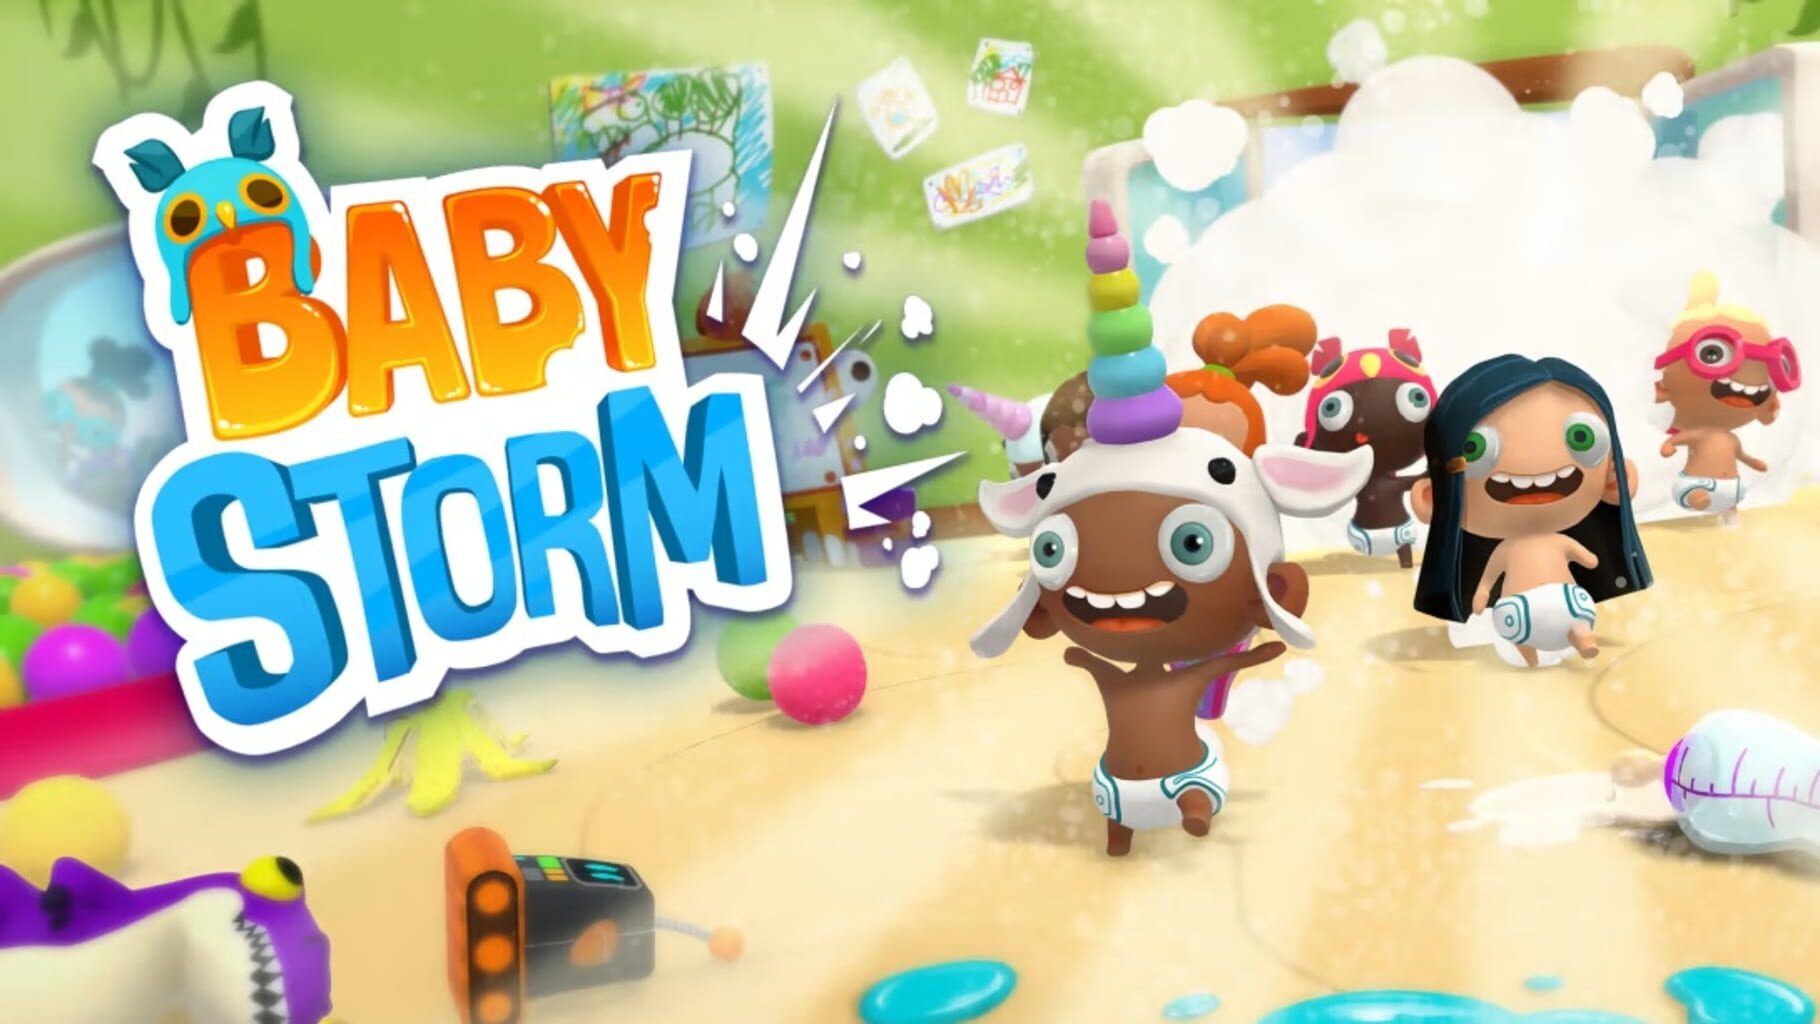 Baby Storm artwork